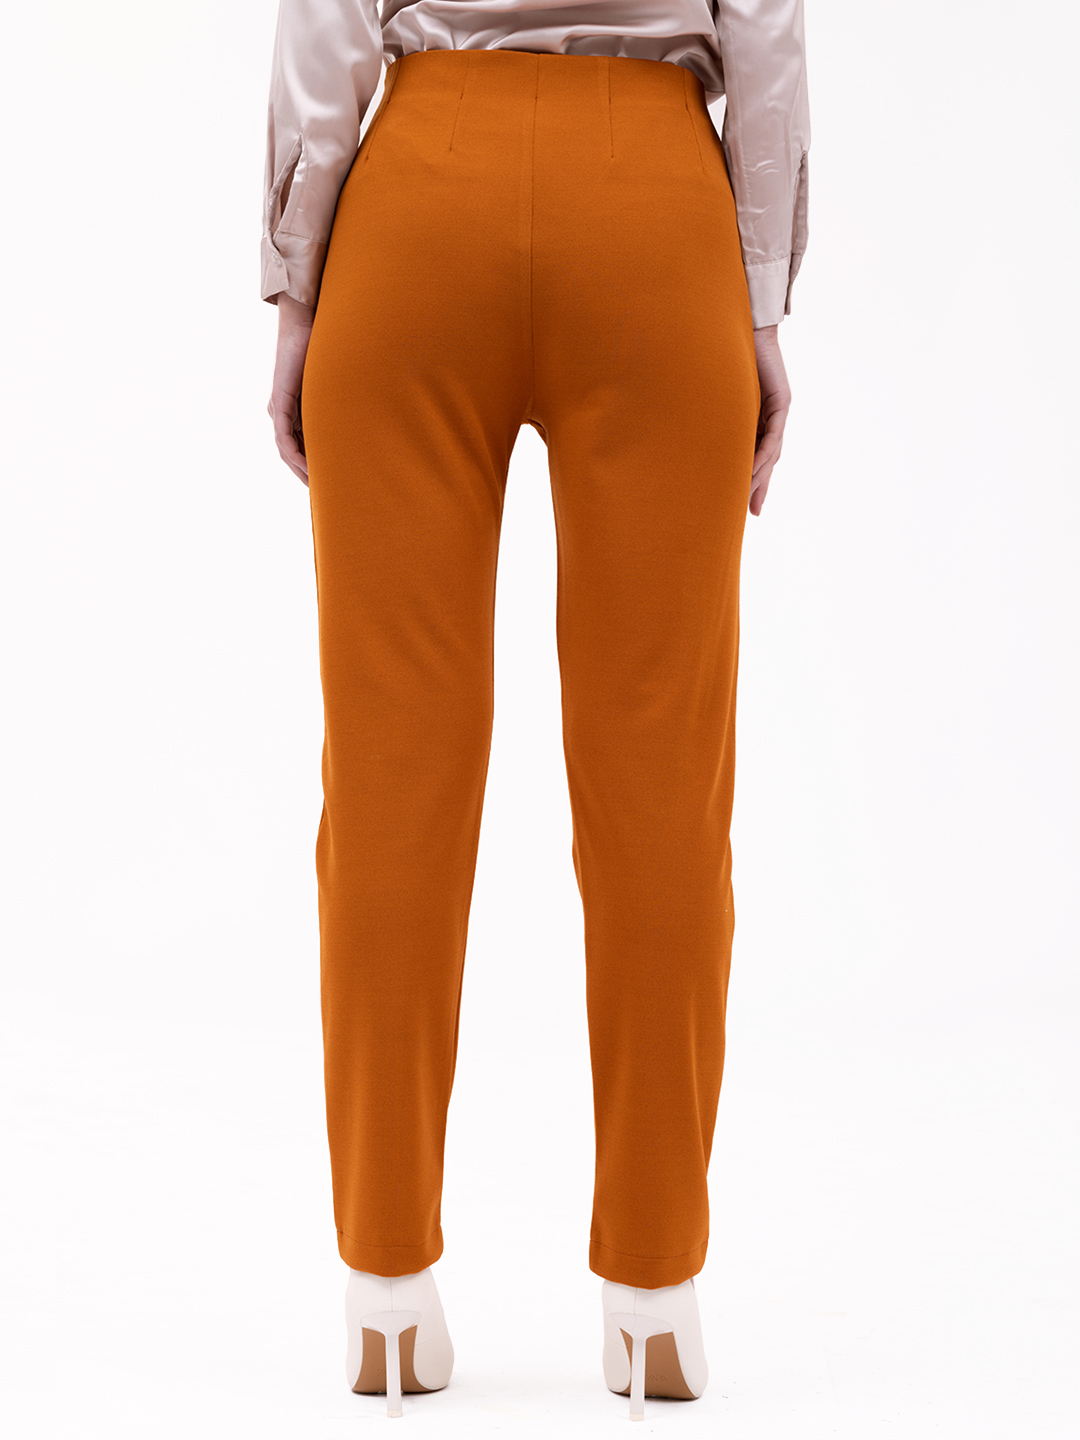 Formal Windsor Tan Trousers -1